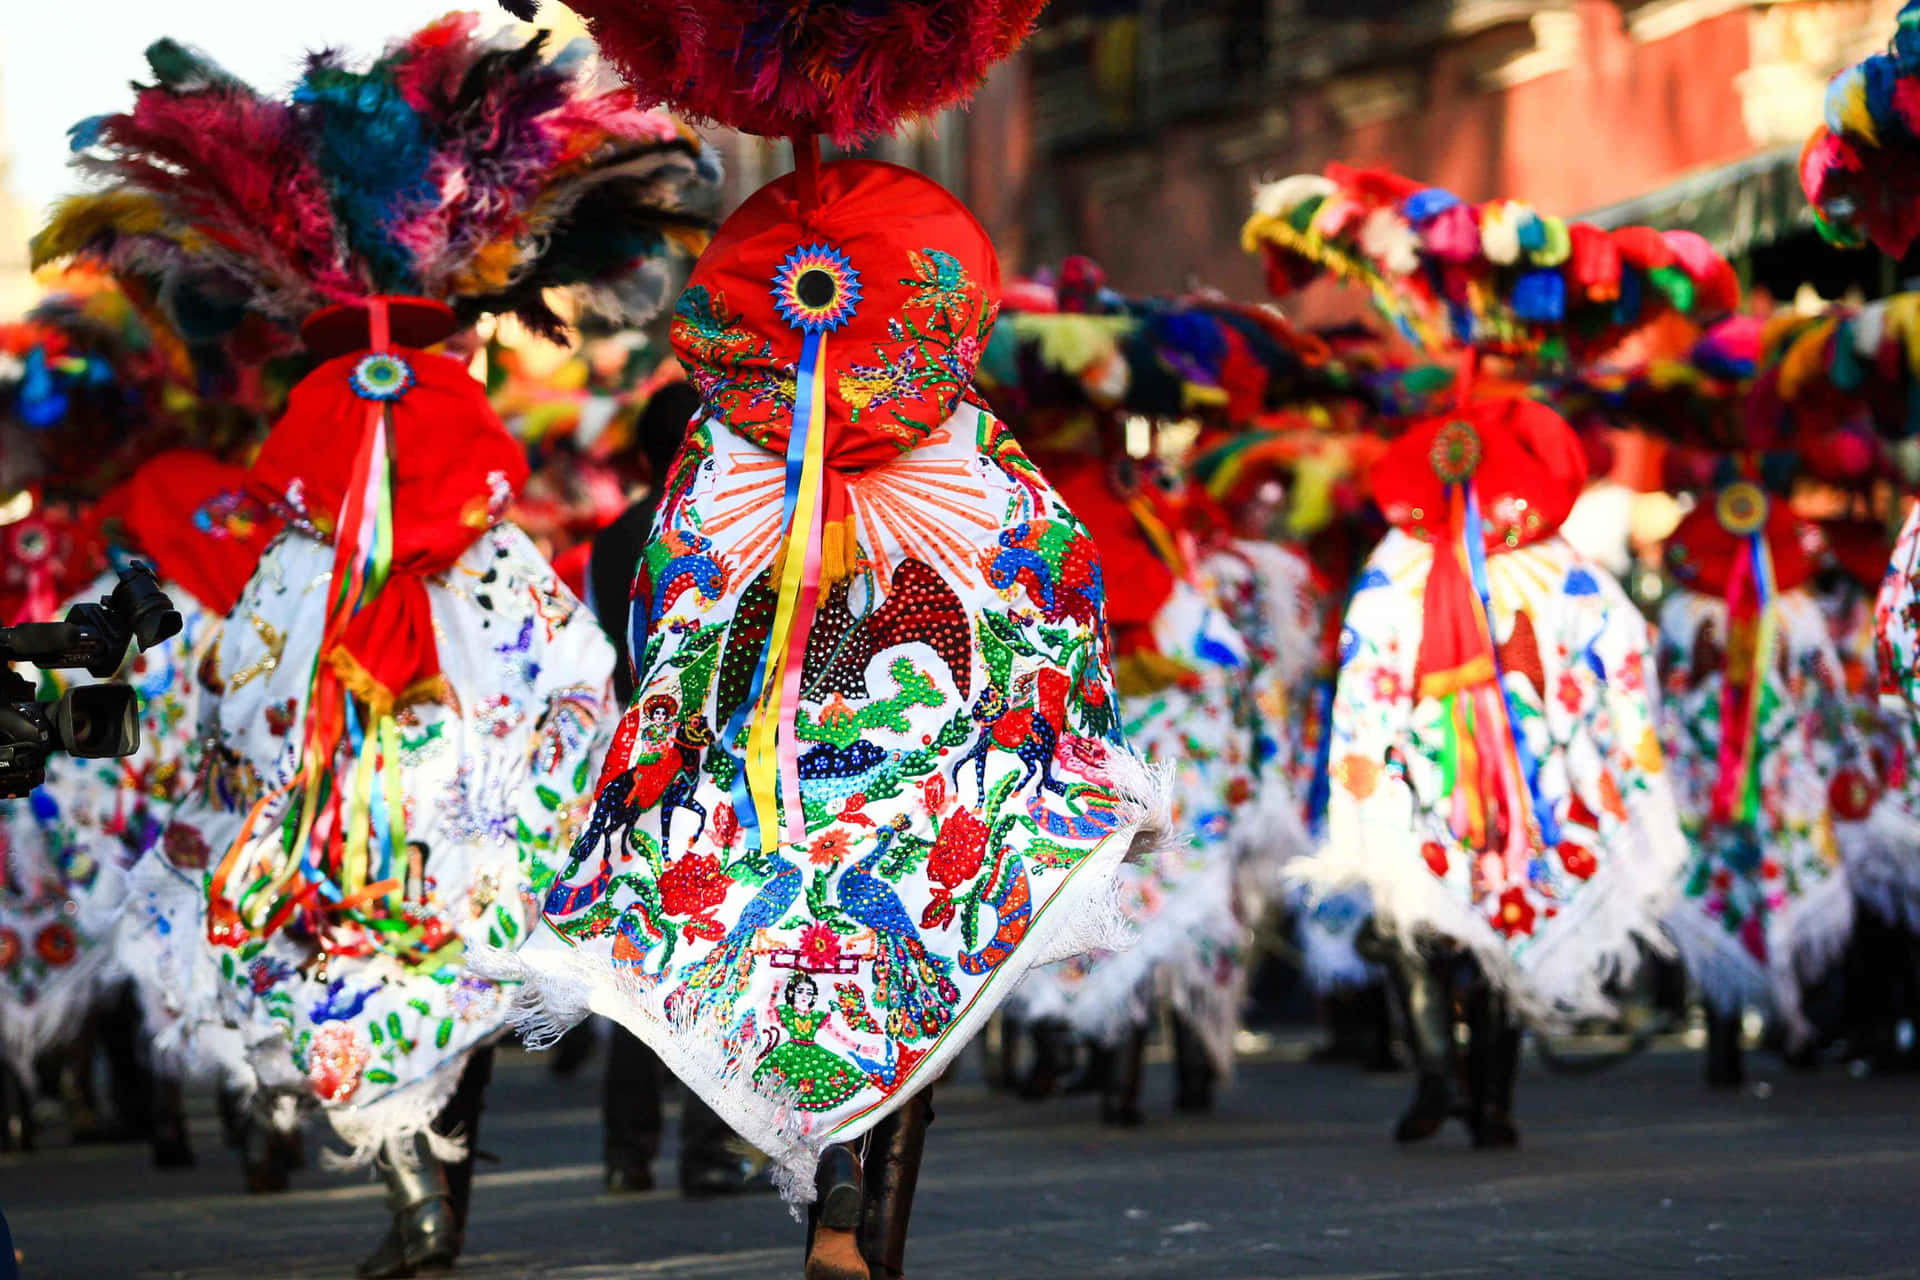 Enjoy a traditional Mexican street Fiesta